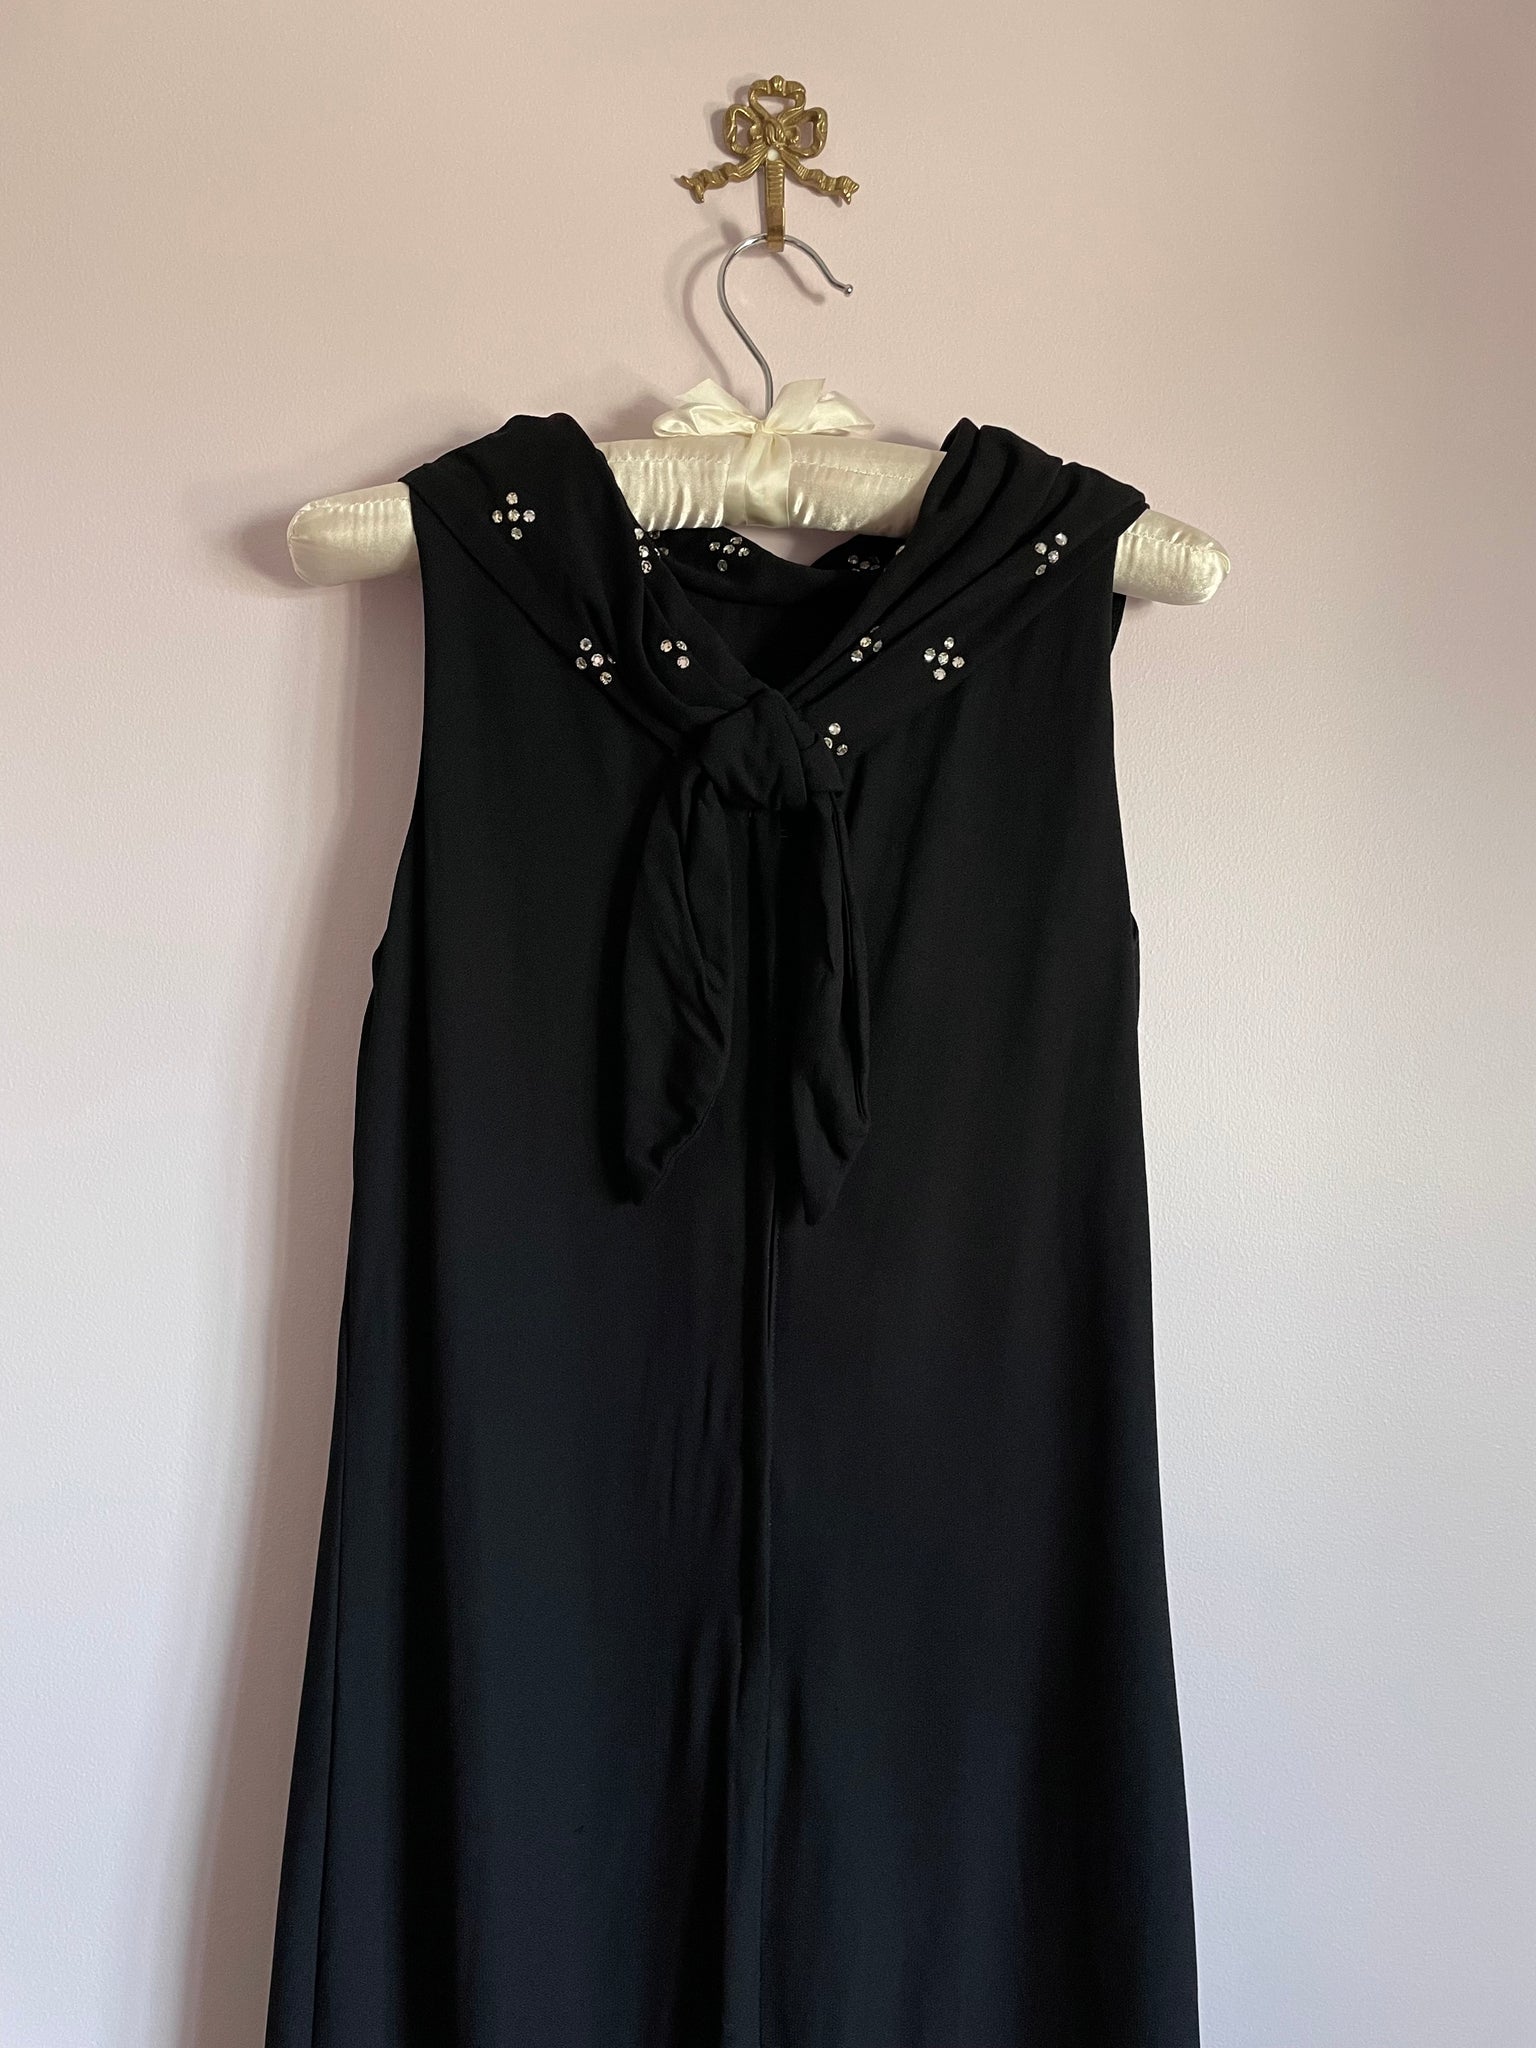 1960s Glass Rhinestone Black Crepe Dress